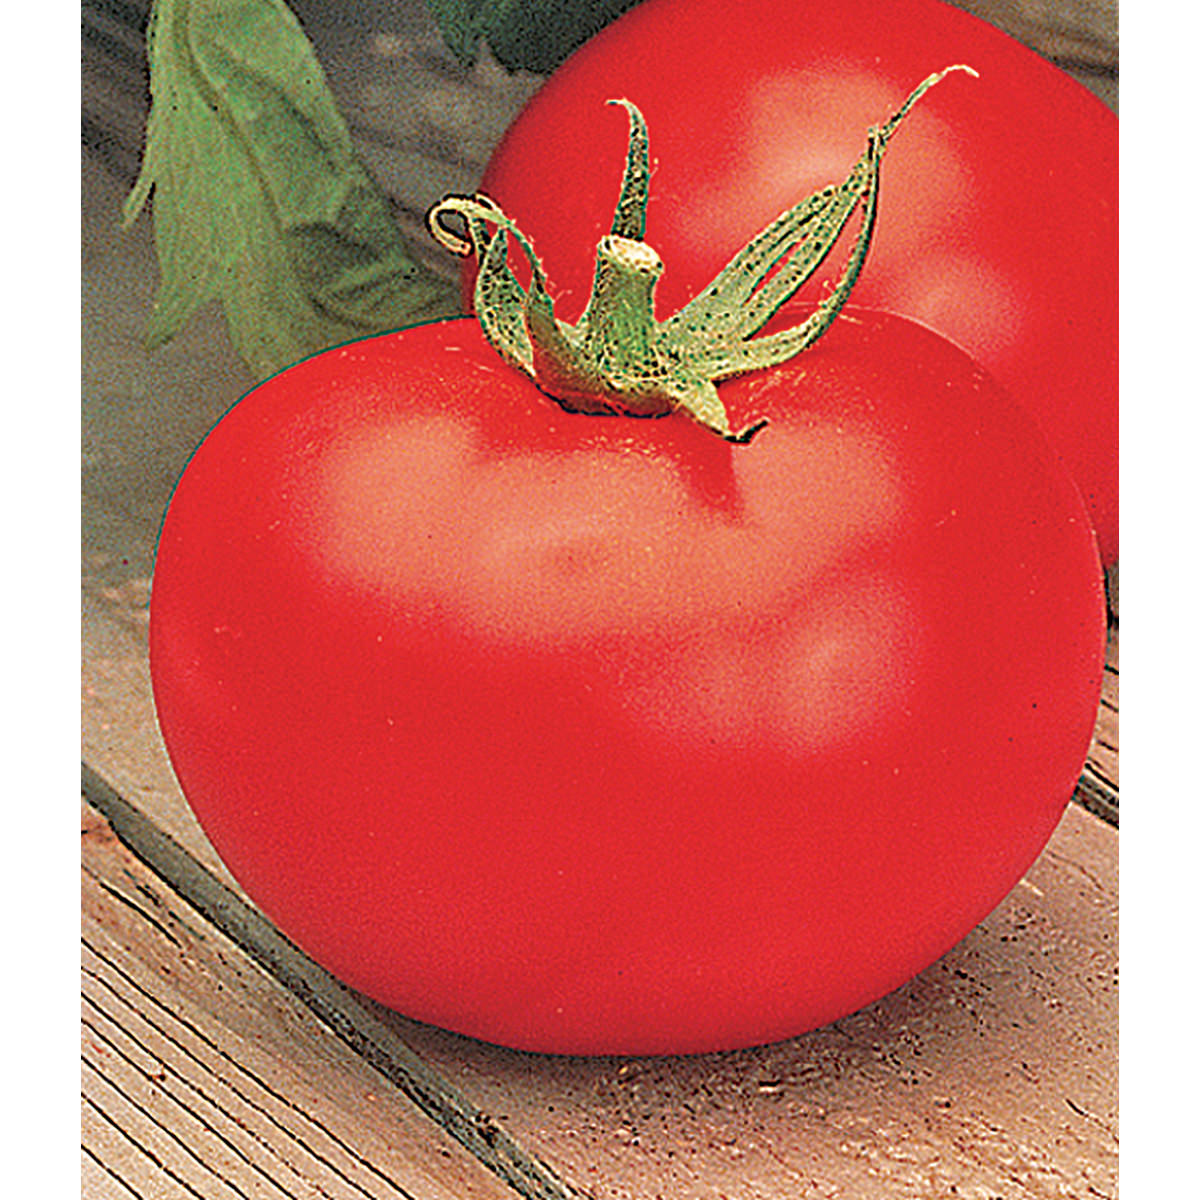 Better Boy VFN F1 Hybrid Tomato Seeds